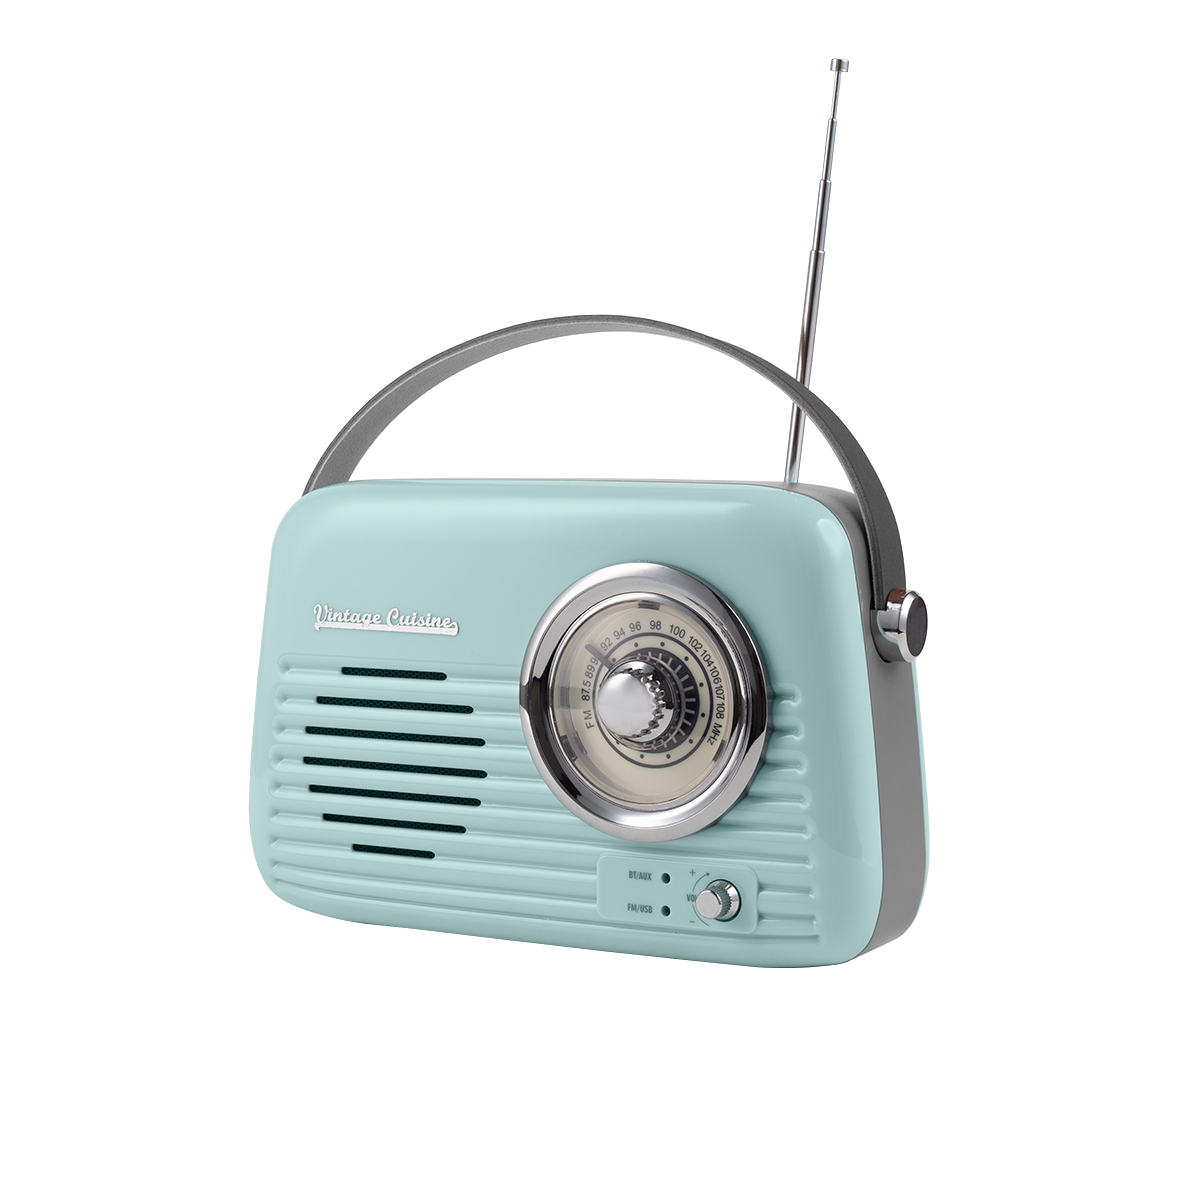 Chrome retro radio with bluetooth speaker by Vintage Cuisine